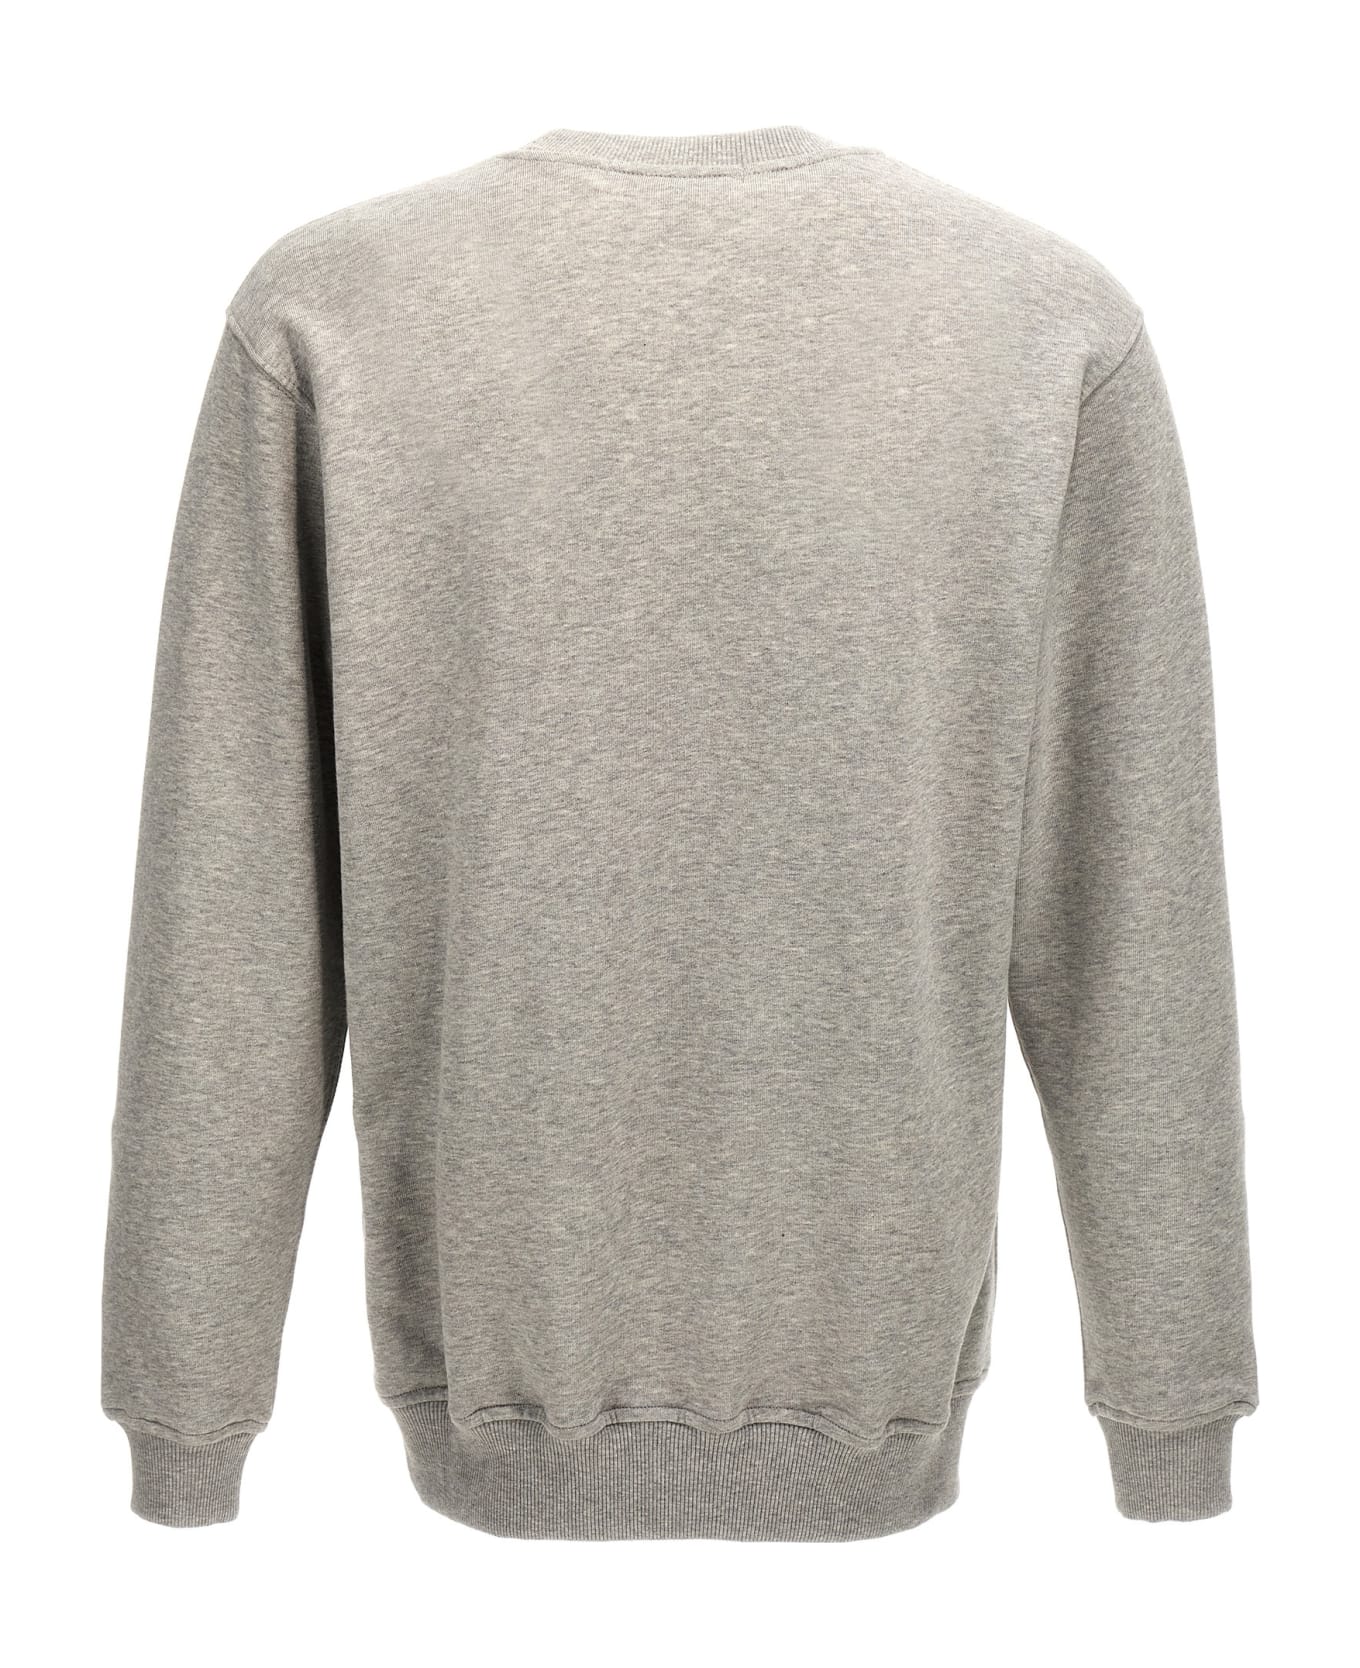 Comme des Garçons Shirt 'andy Warhol' Sweatshirt - Top Grey フリース